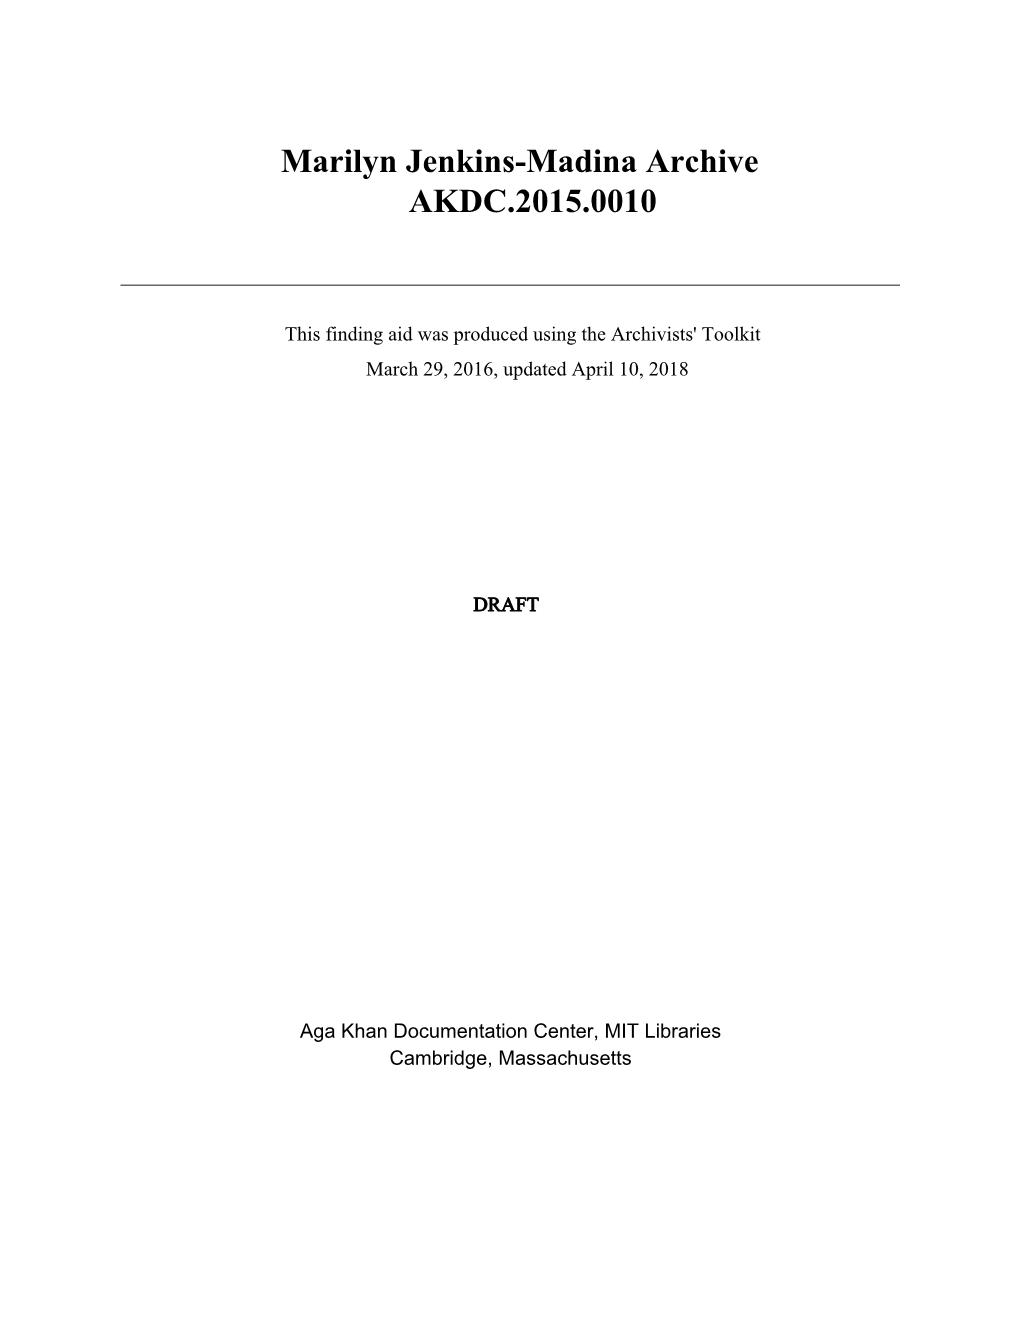 Marilyn Jenkins-Madina Archive AKDC.2015.0010